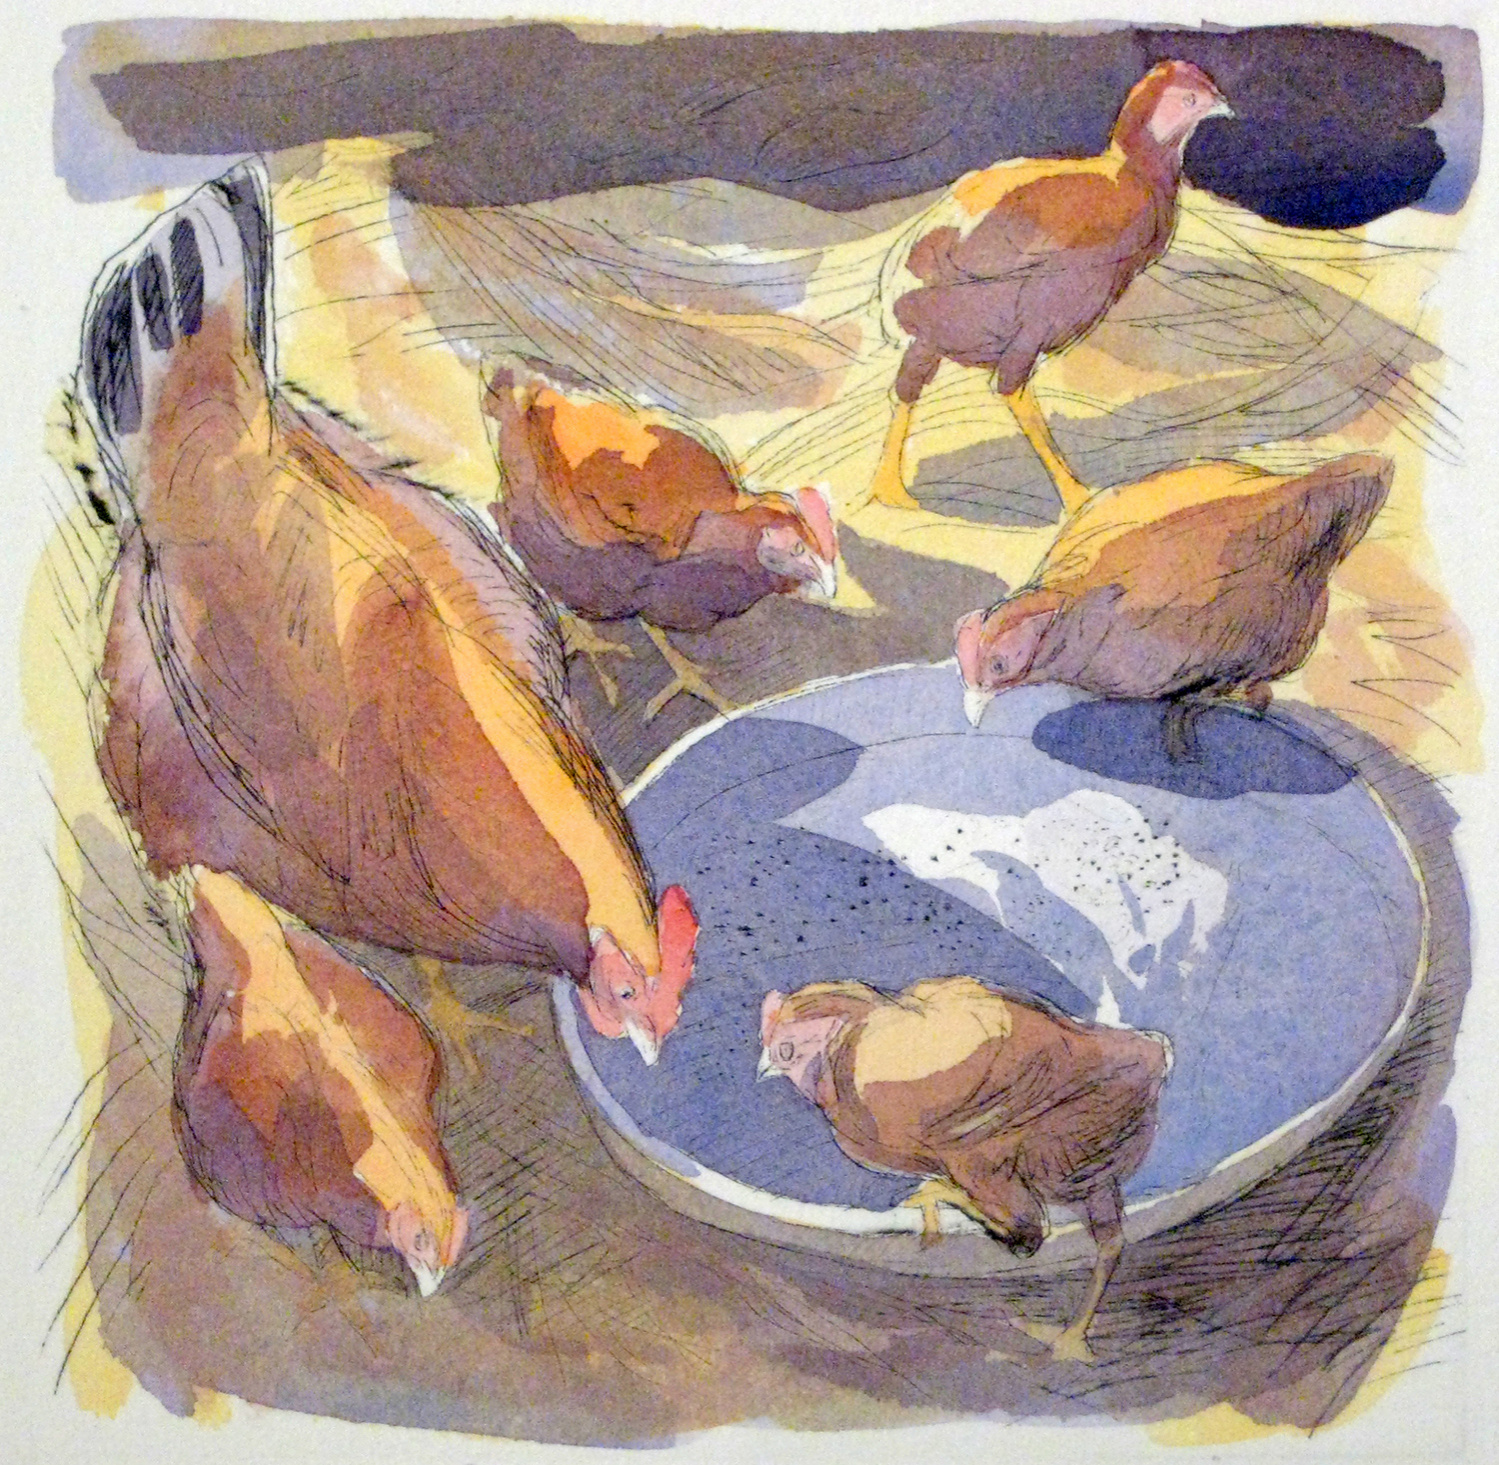 Hen & Chicks by Robert Greenhalf